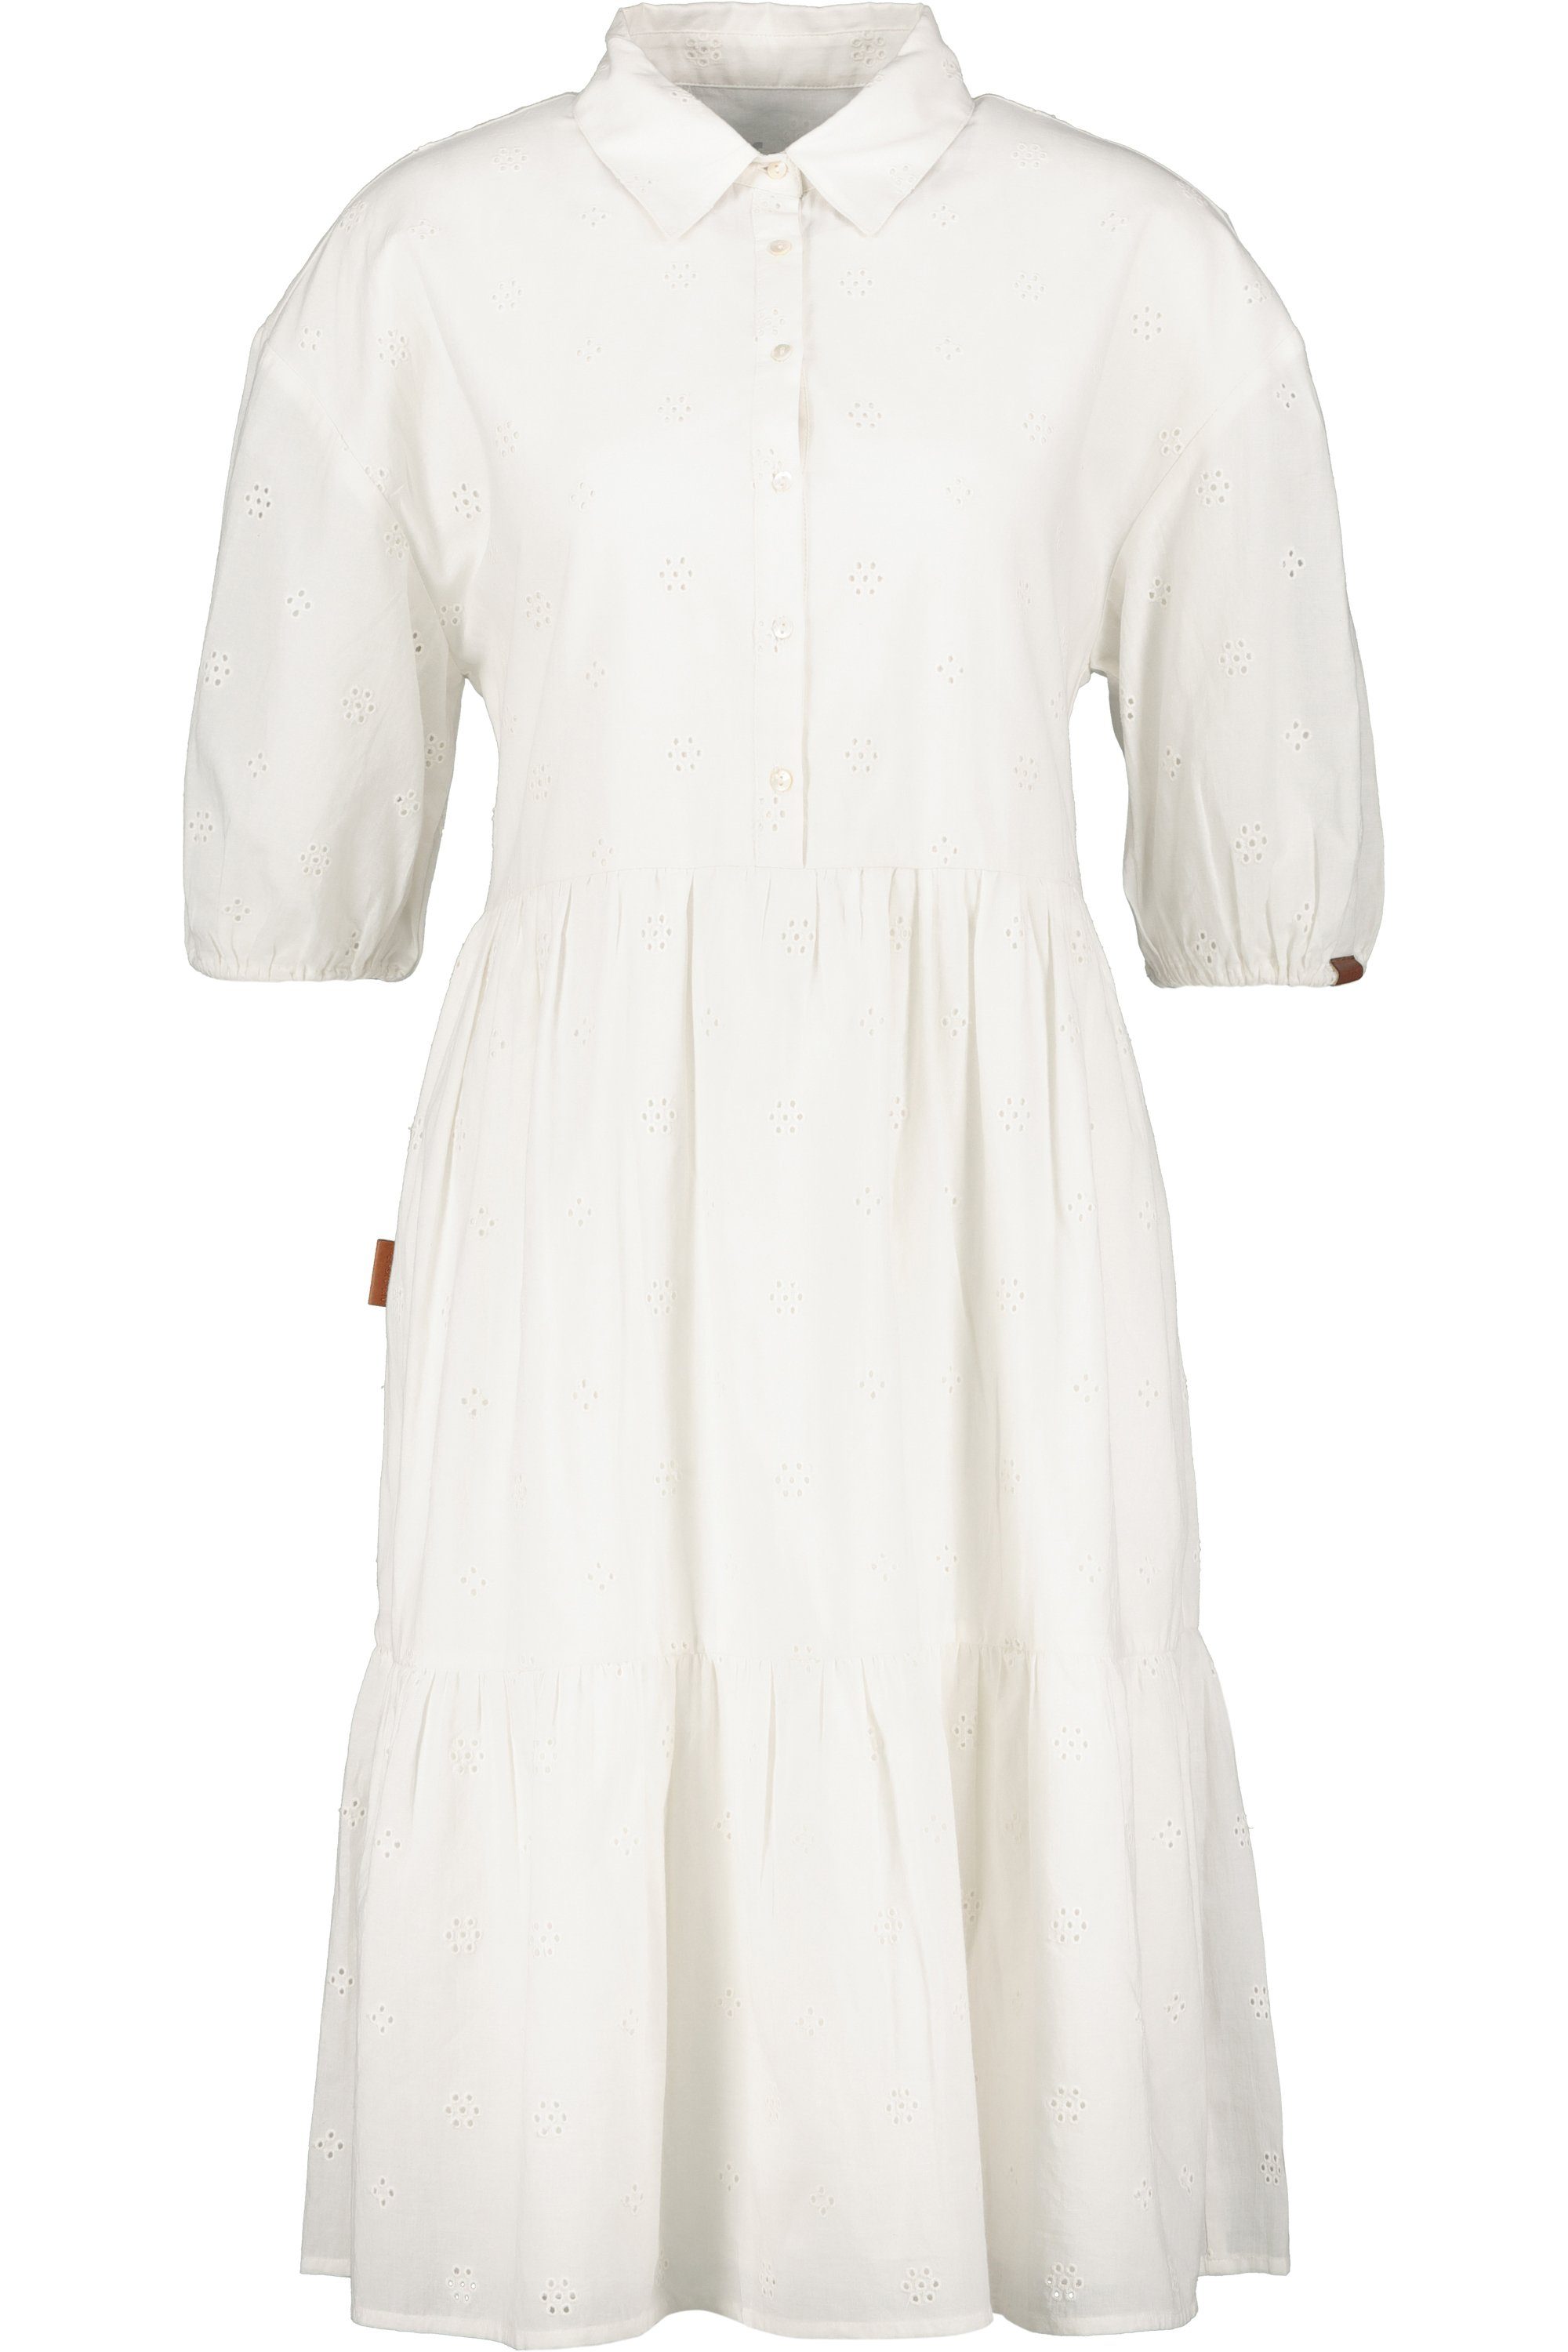 Alife & Kickin Jerseykleid SalomeAK Damen white E Kleid Dress Sommerkleid